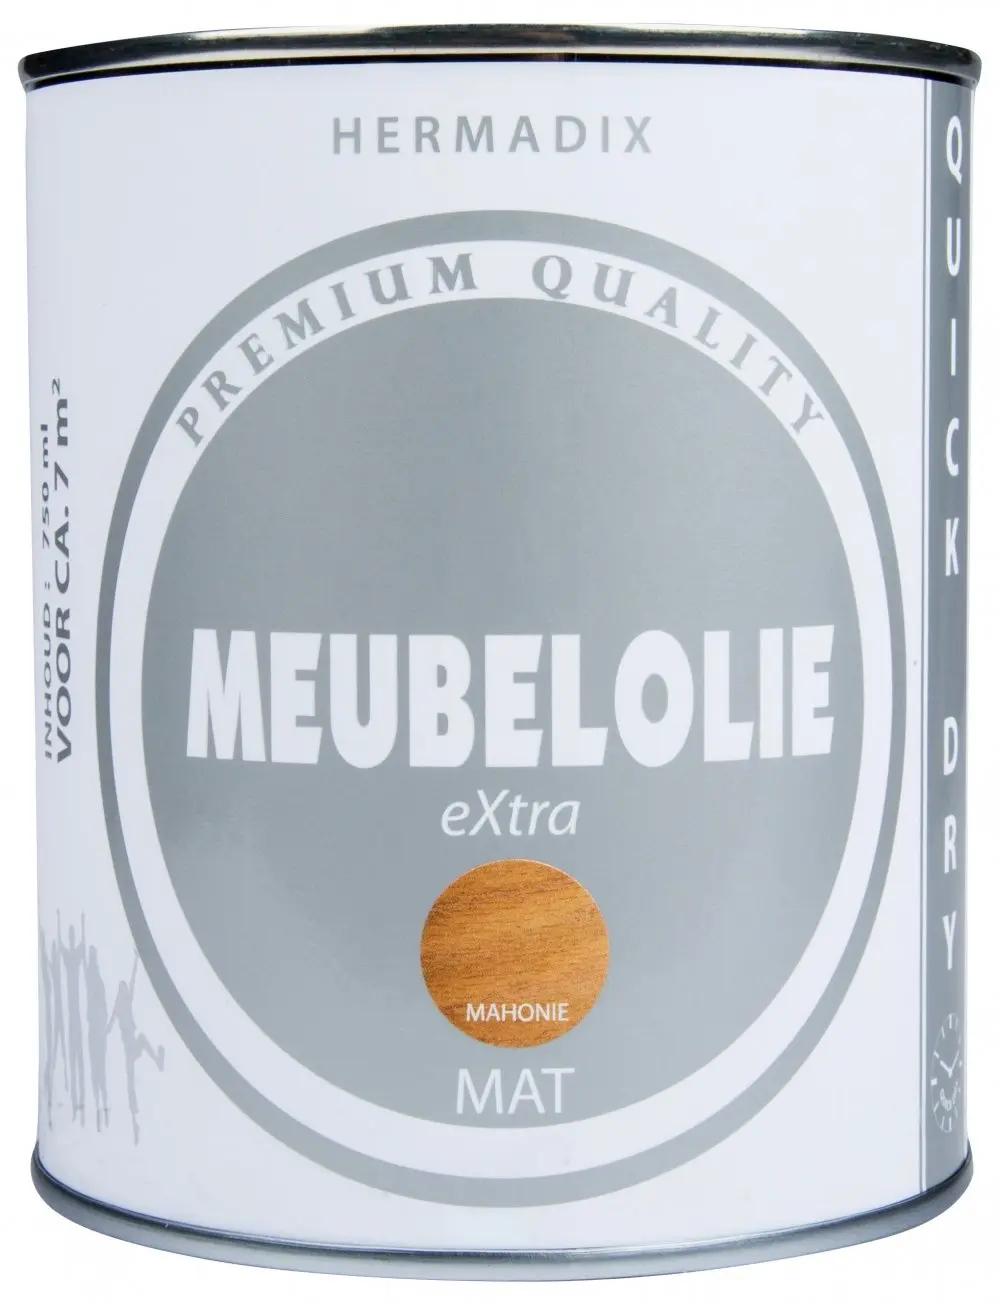 Hermadix - hermadix-meubellolie-extra-mat-mahonie-verfcompleet.nl